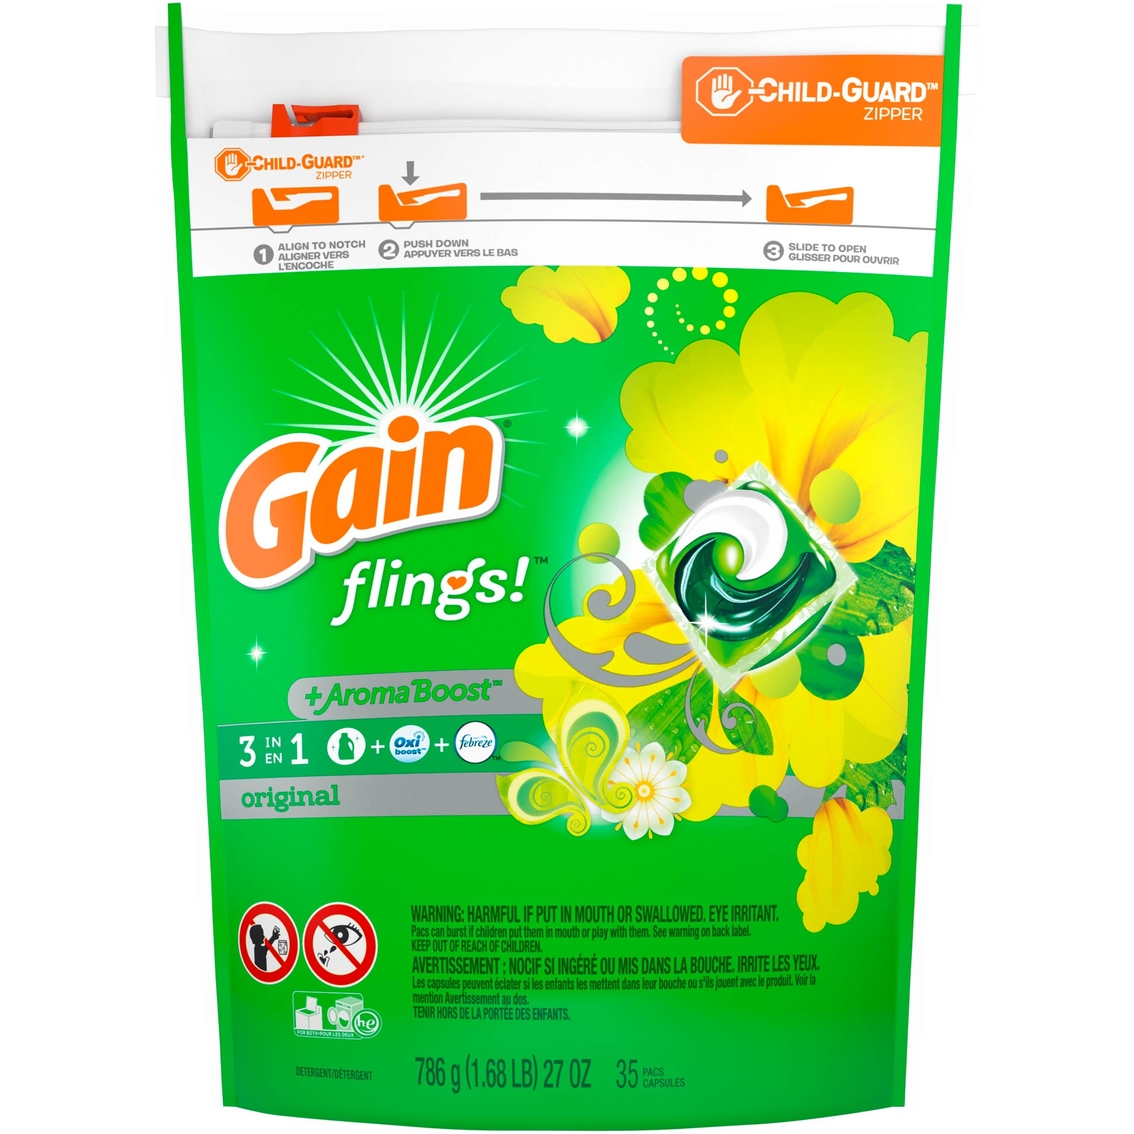 Gain flings! + Aroma Boost Original Laundry Detergent Pacs 35 Ct.